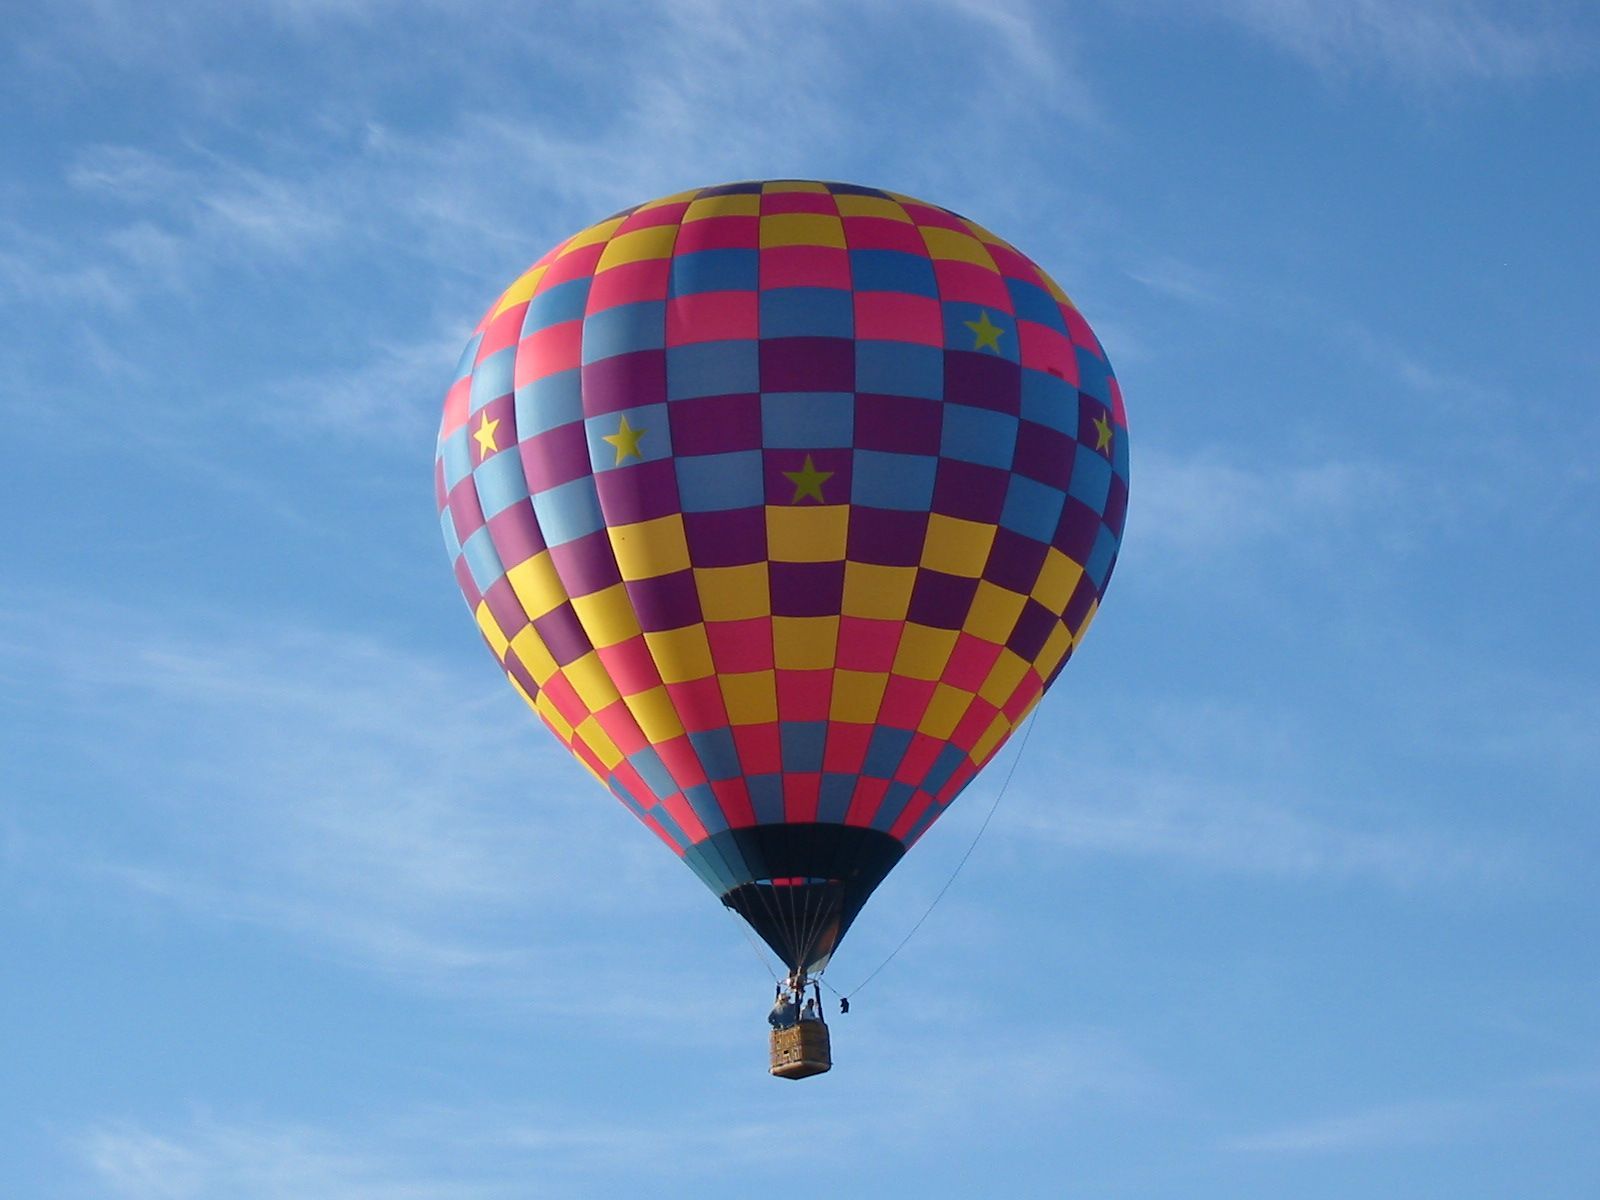 file-balloon-free-image-jpg-wikimedia-commons